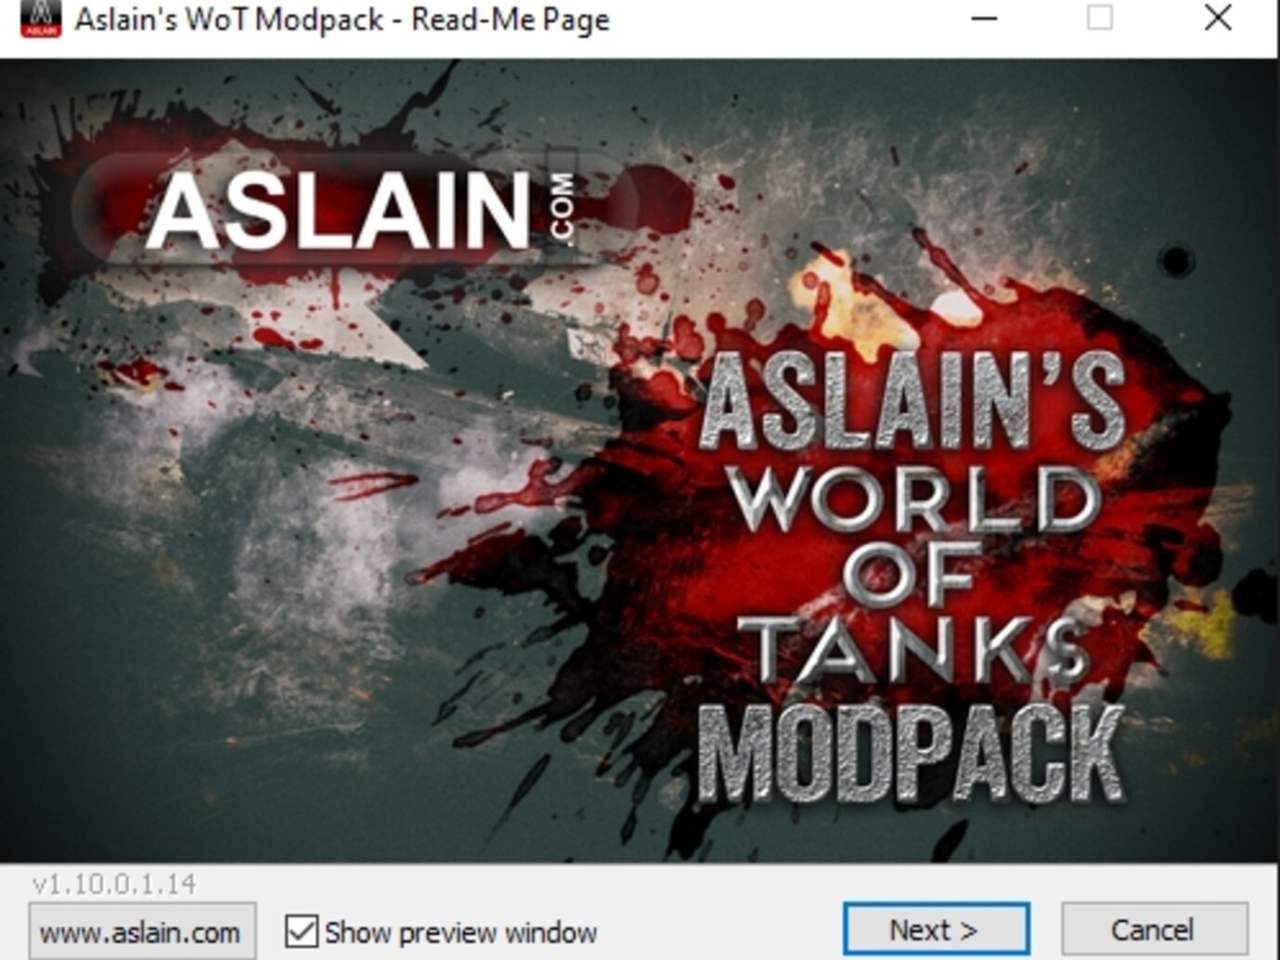 Download Aslain S Modpack For Wot 1 11 1 1 Via The Direct Link